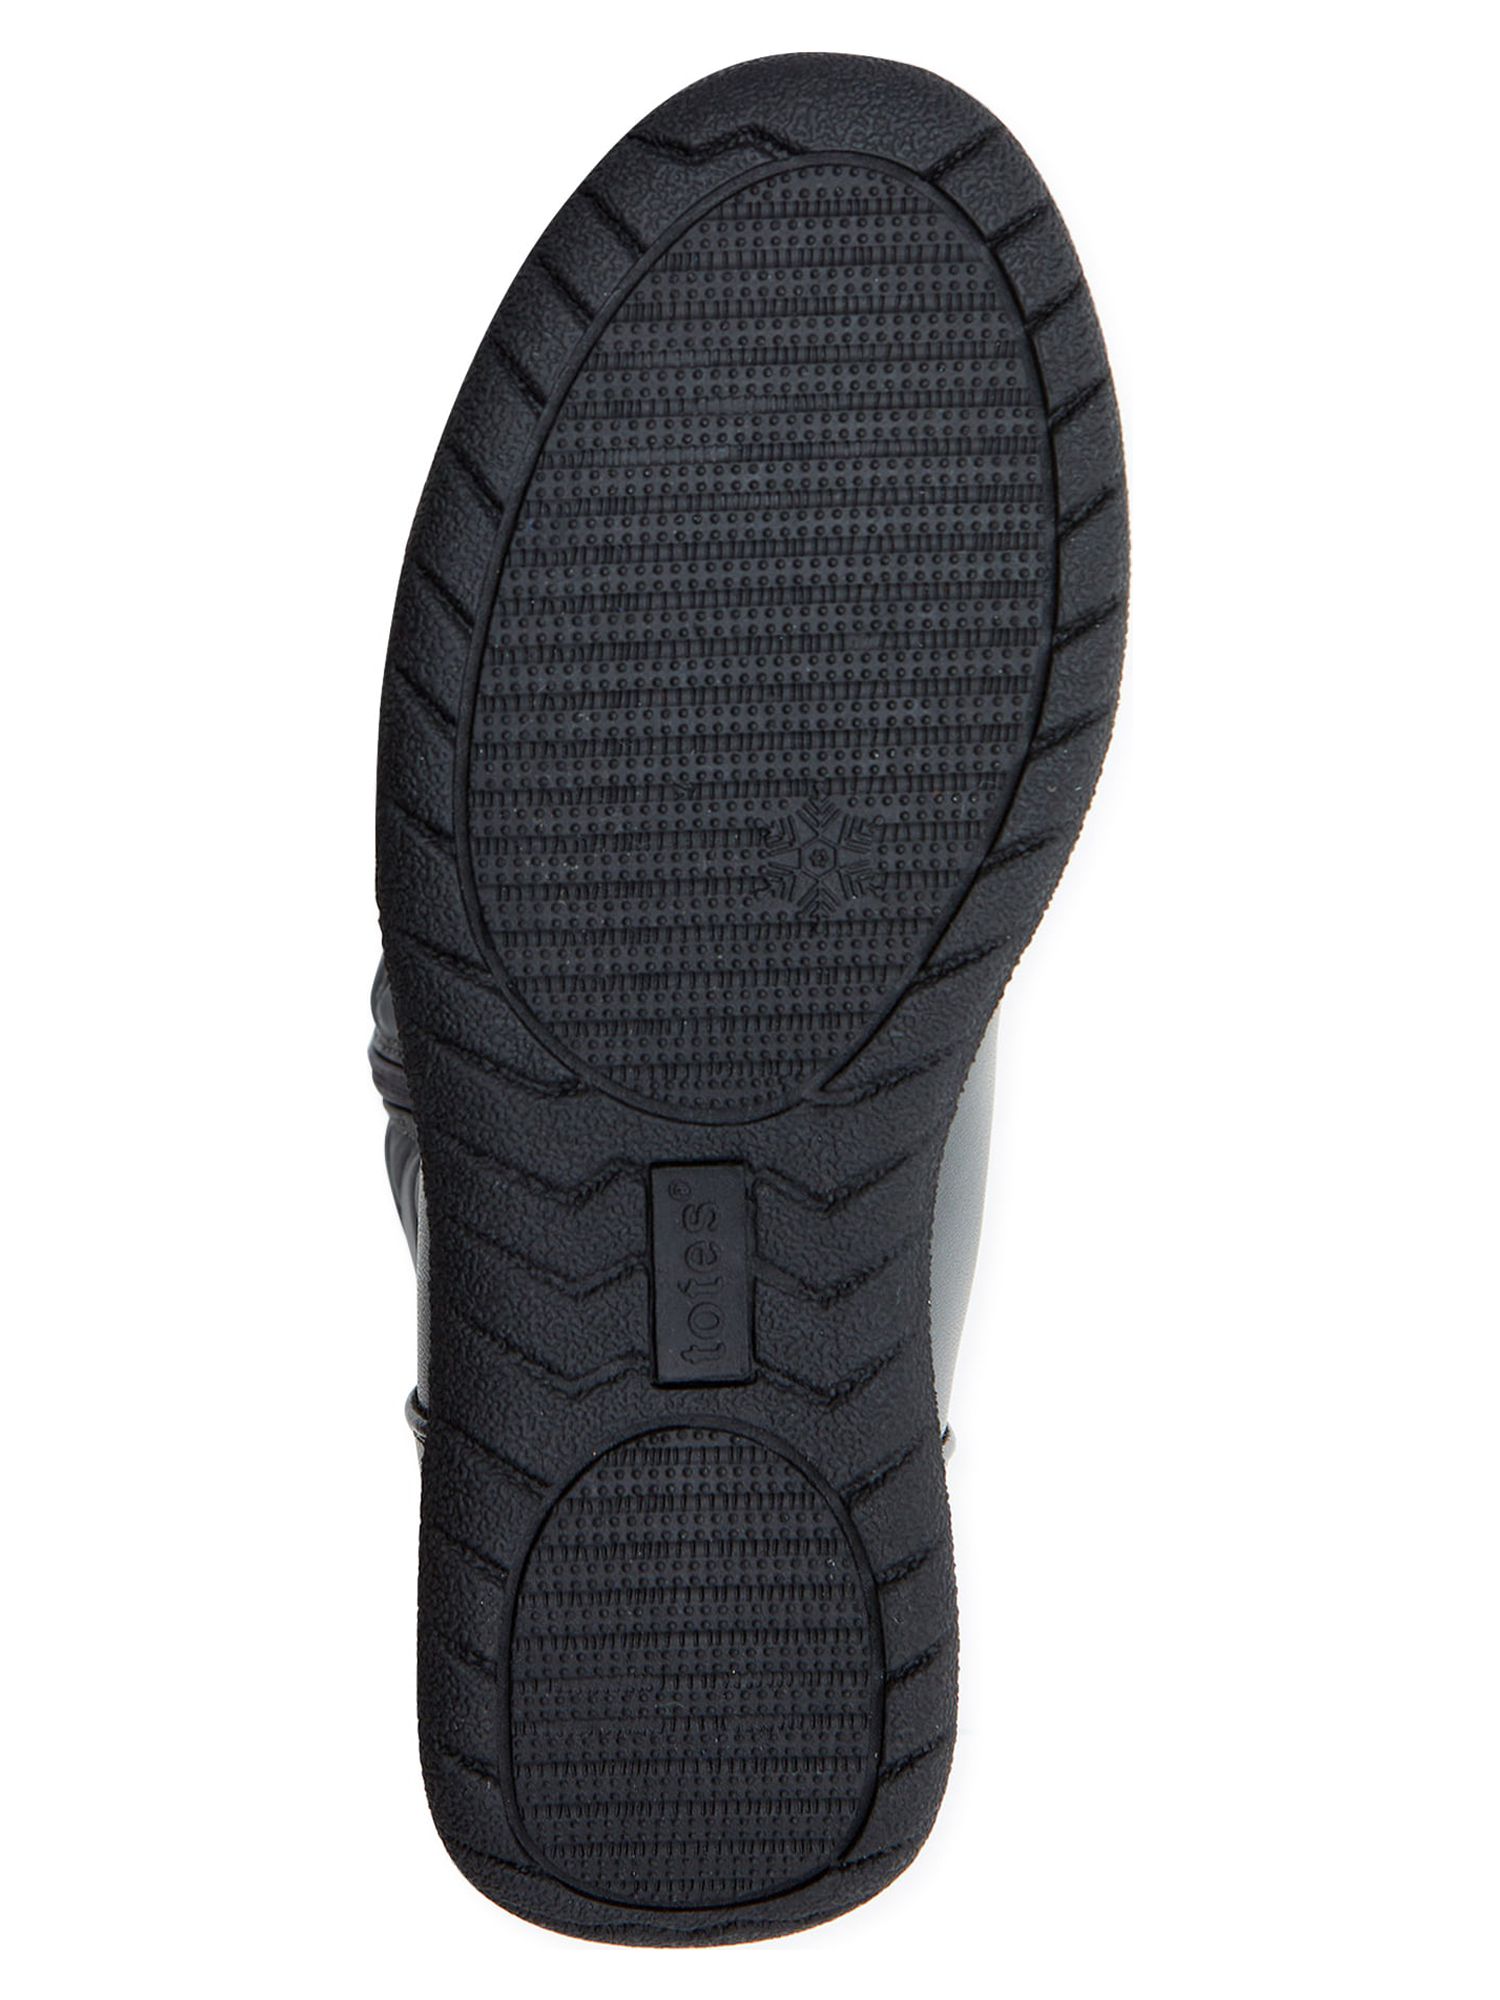 Totes Women's Edgen Waterproof Zip Up Snow Boots, Sizes 6-11, Wide Width Available - image 4 of 5